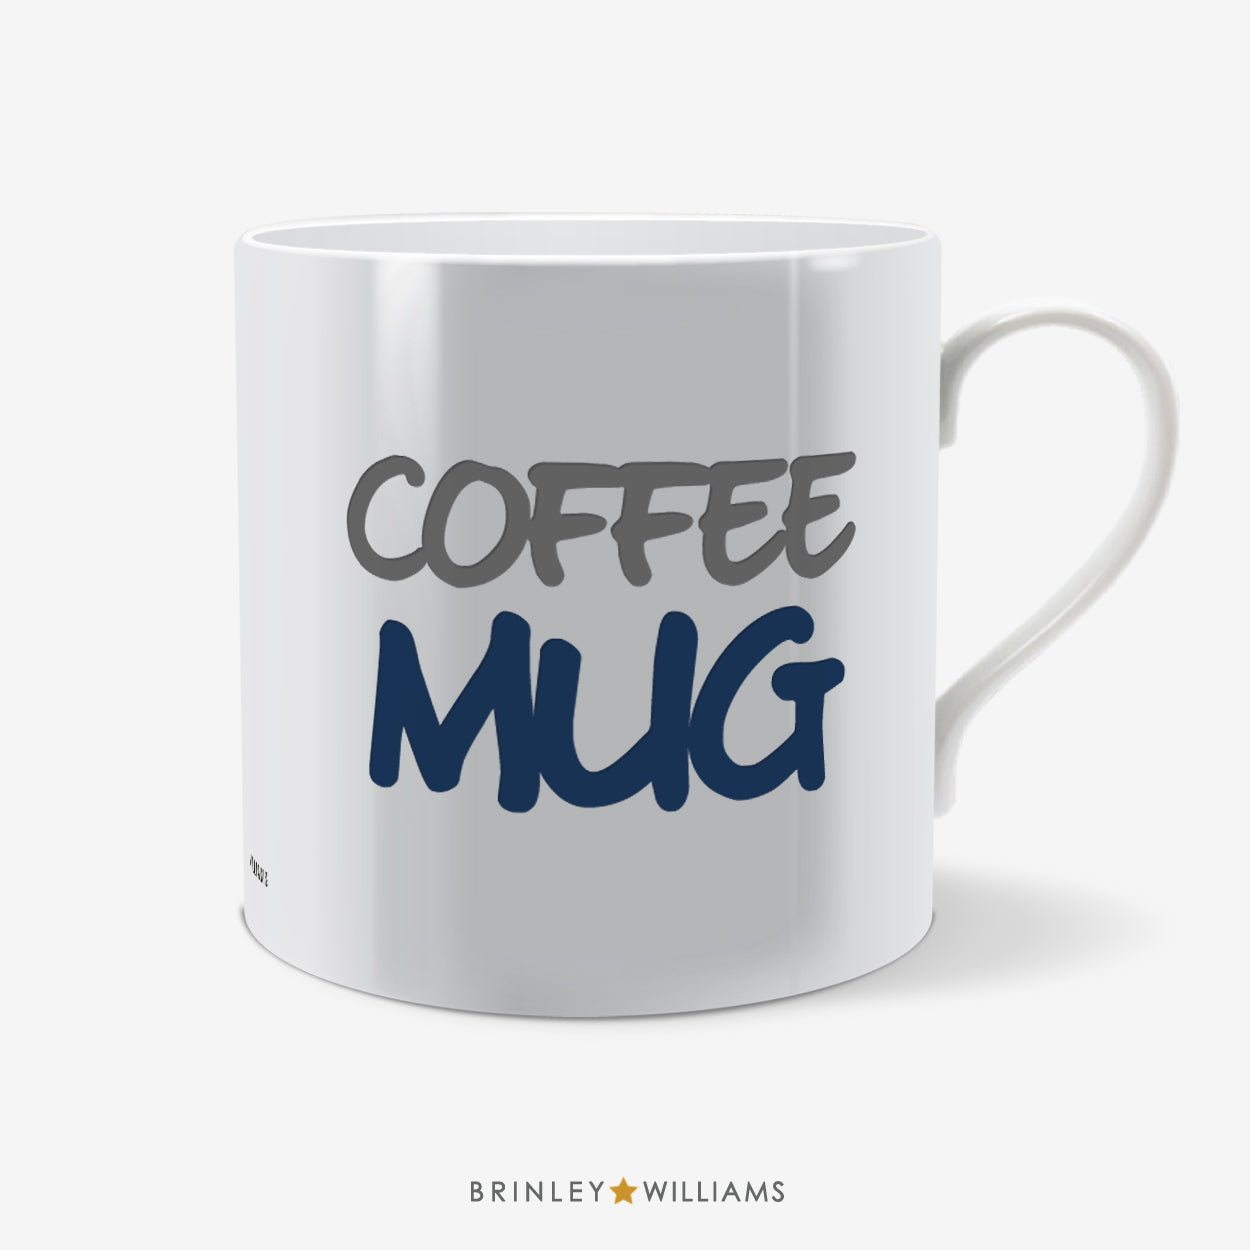 Coffee Mug Fun Mug - Navy